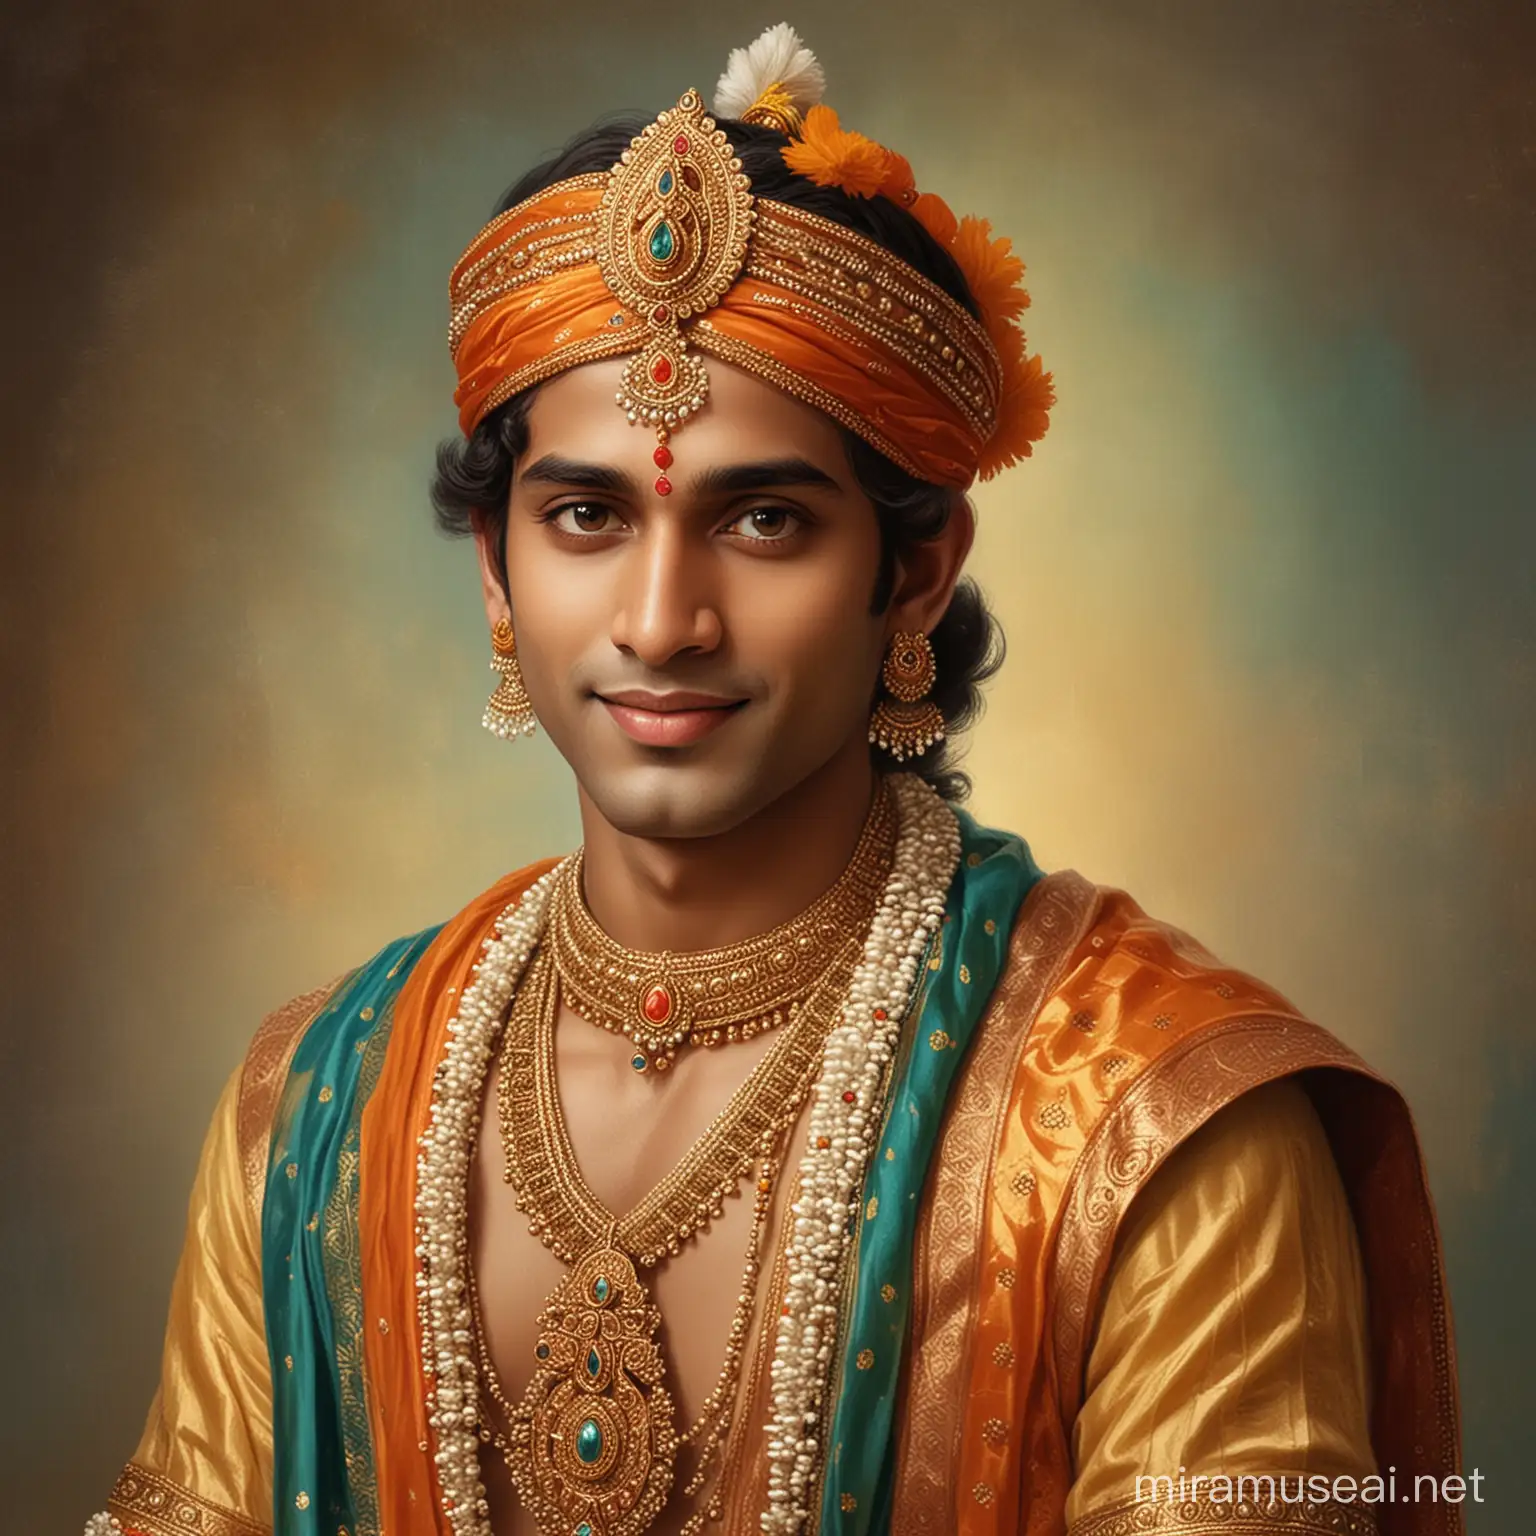 Joyful Prince Lord Sri Rama Chandra in Traditional Hindu Attire